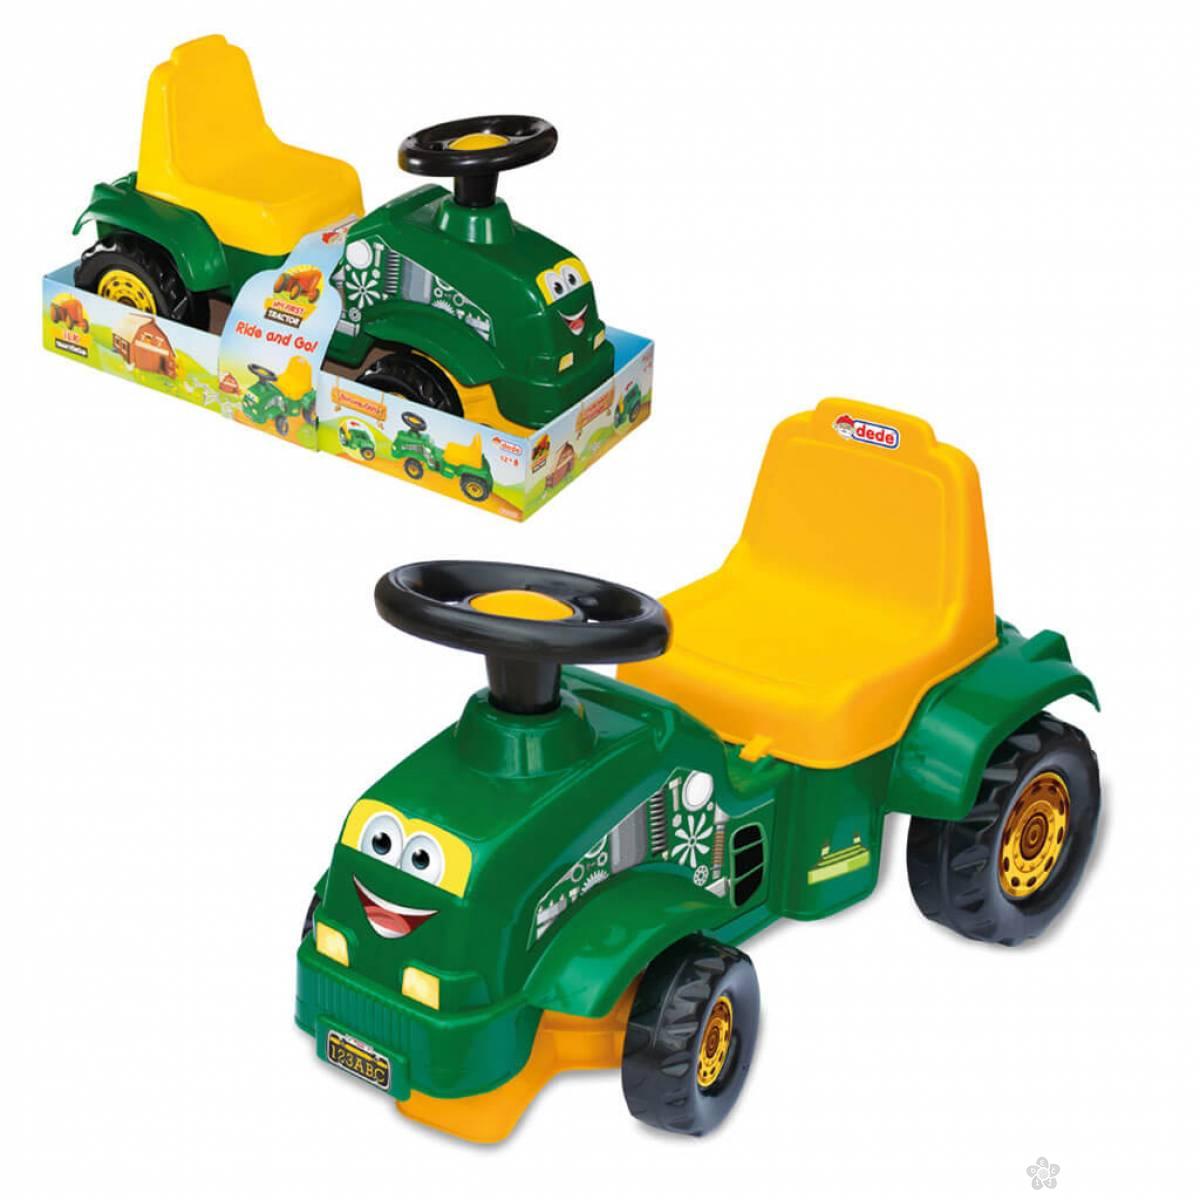 Traktor guralica 033557 